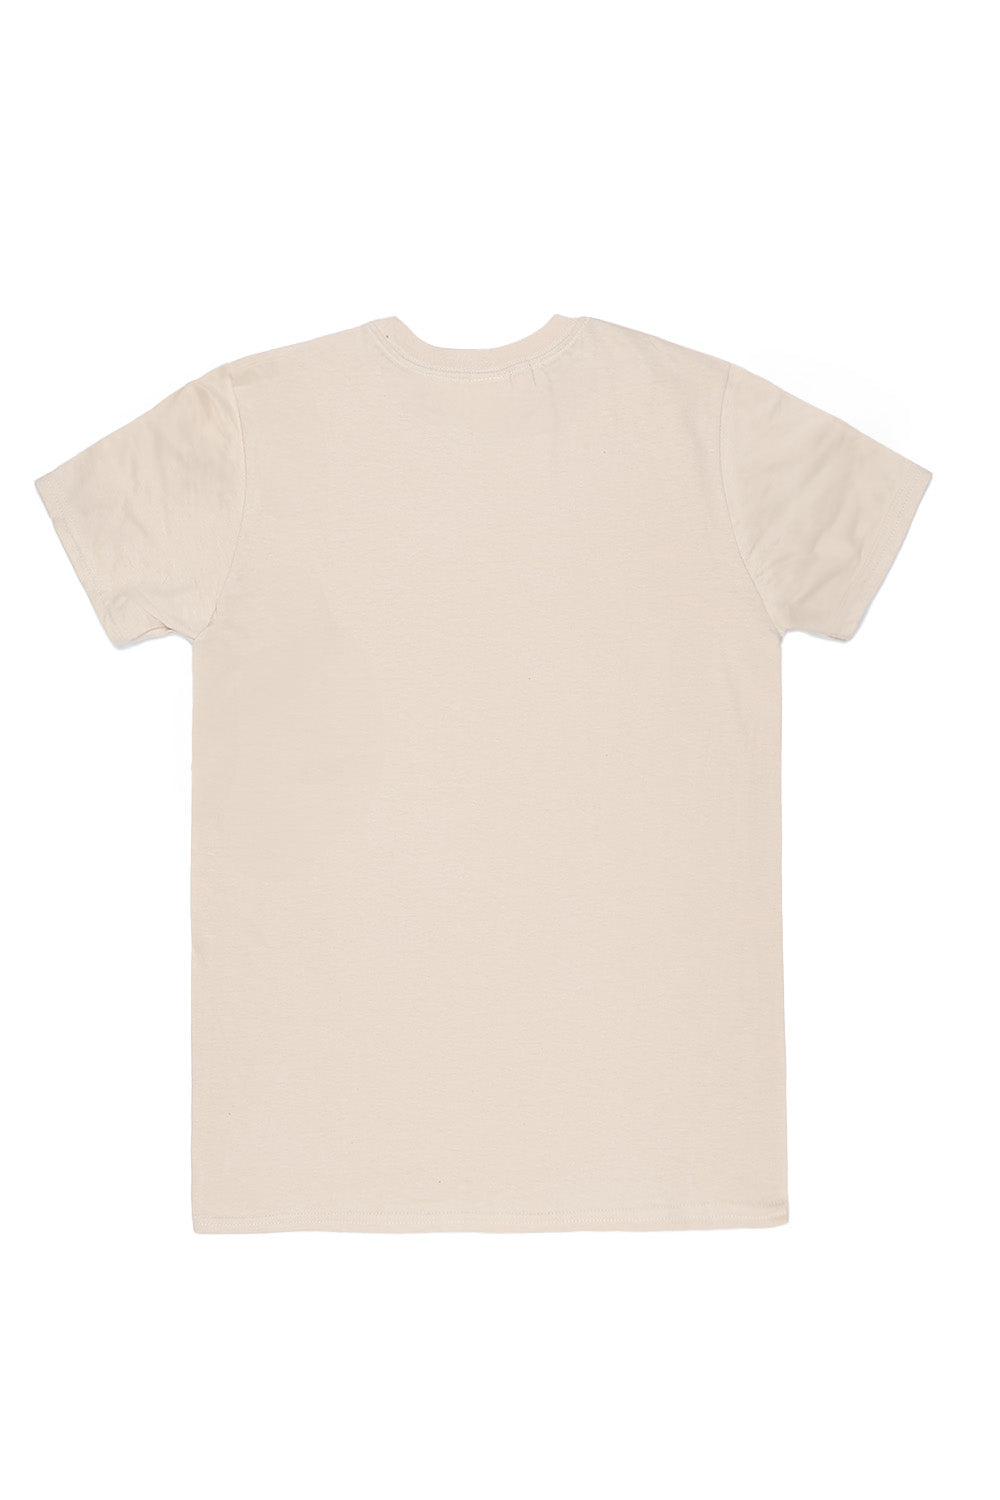 LA T-Shirt in Sand (Custom Packs)